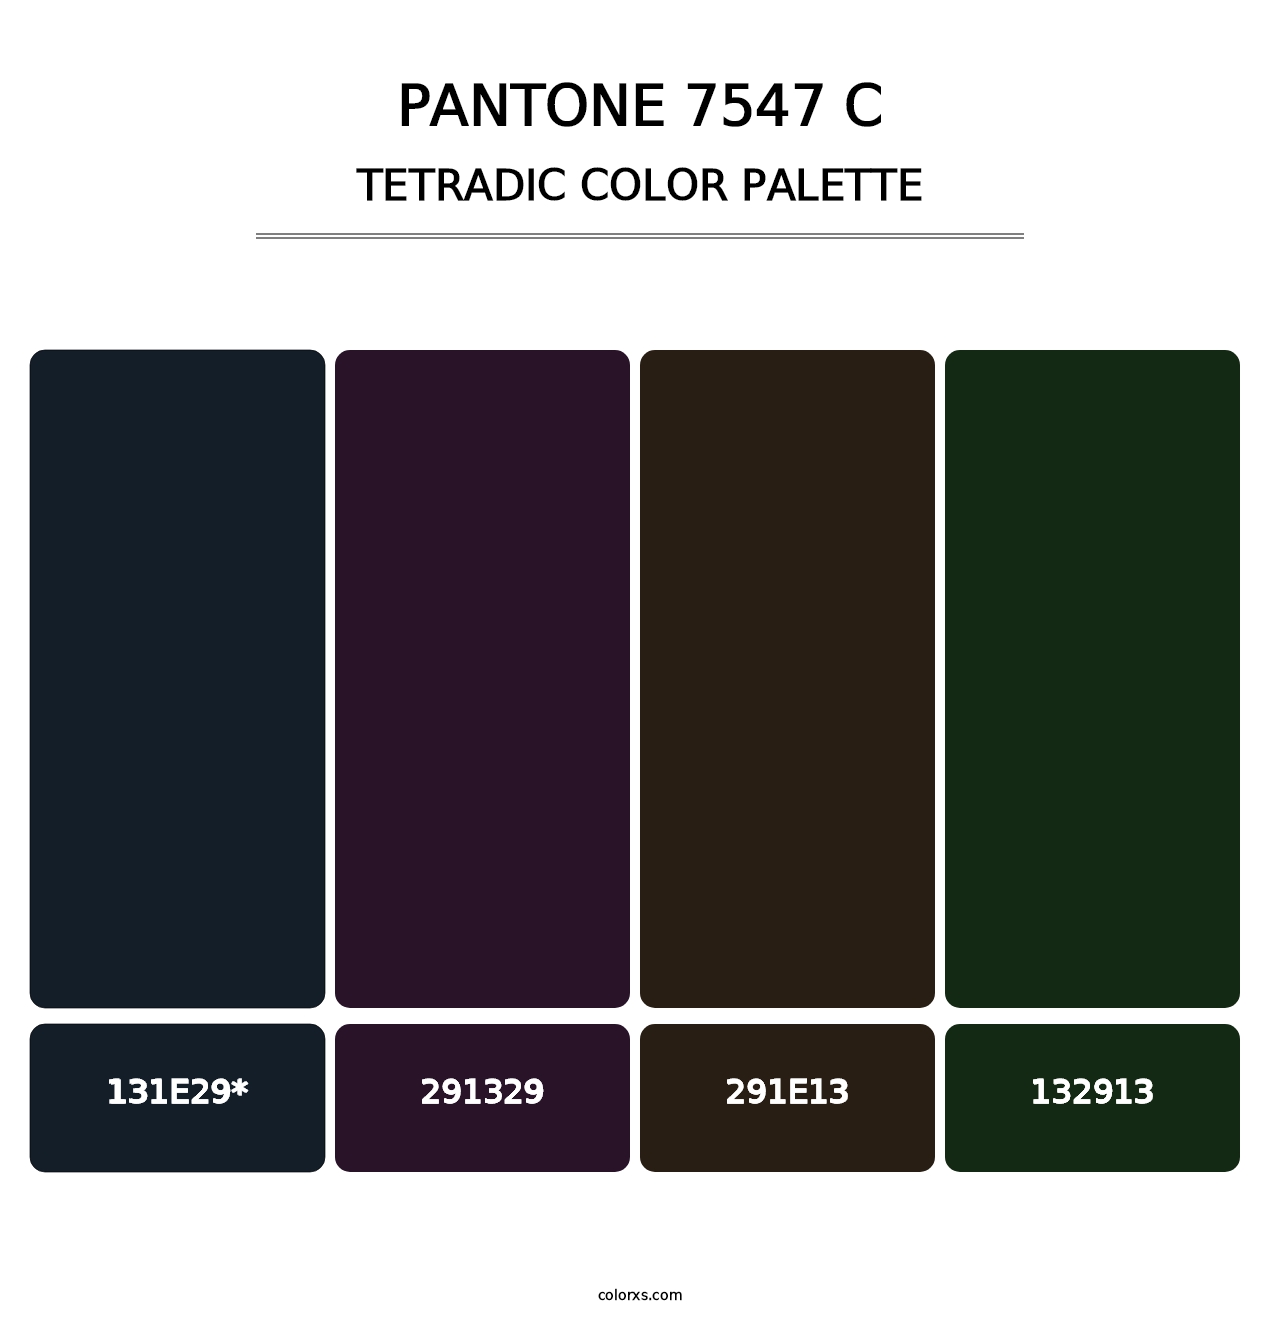 PANTONE 7547 C - Tetradic Color Palette